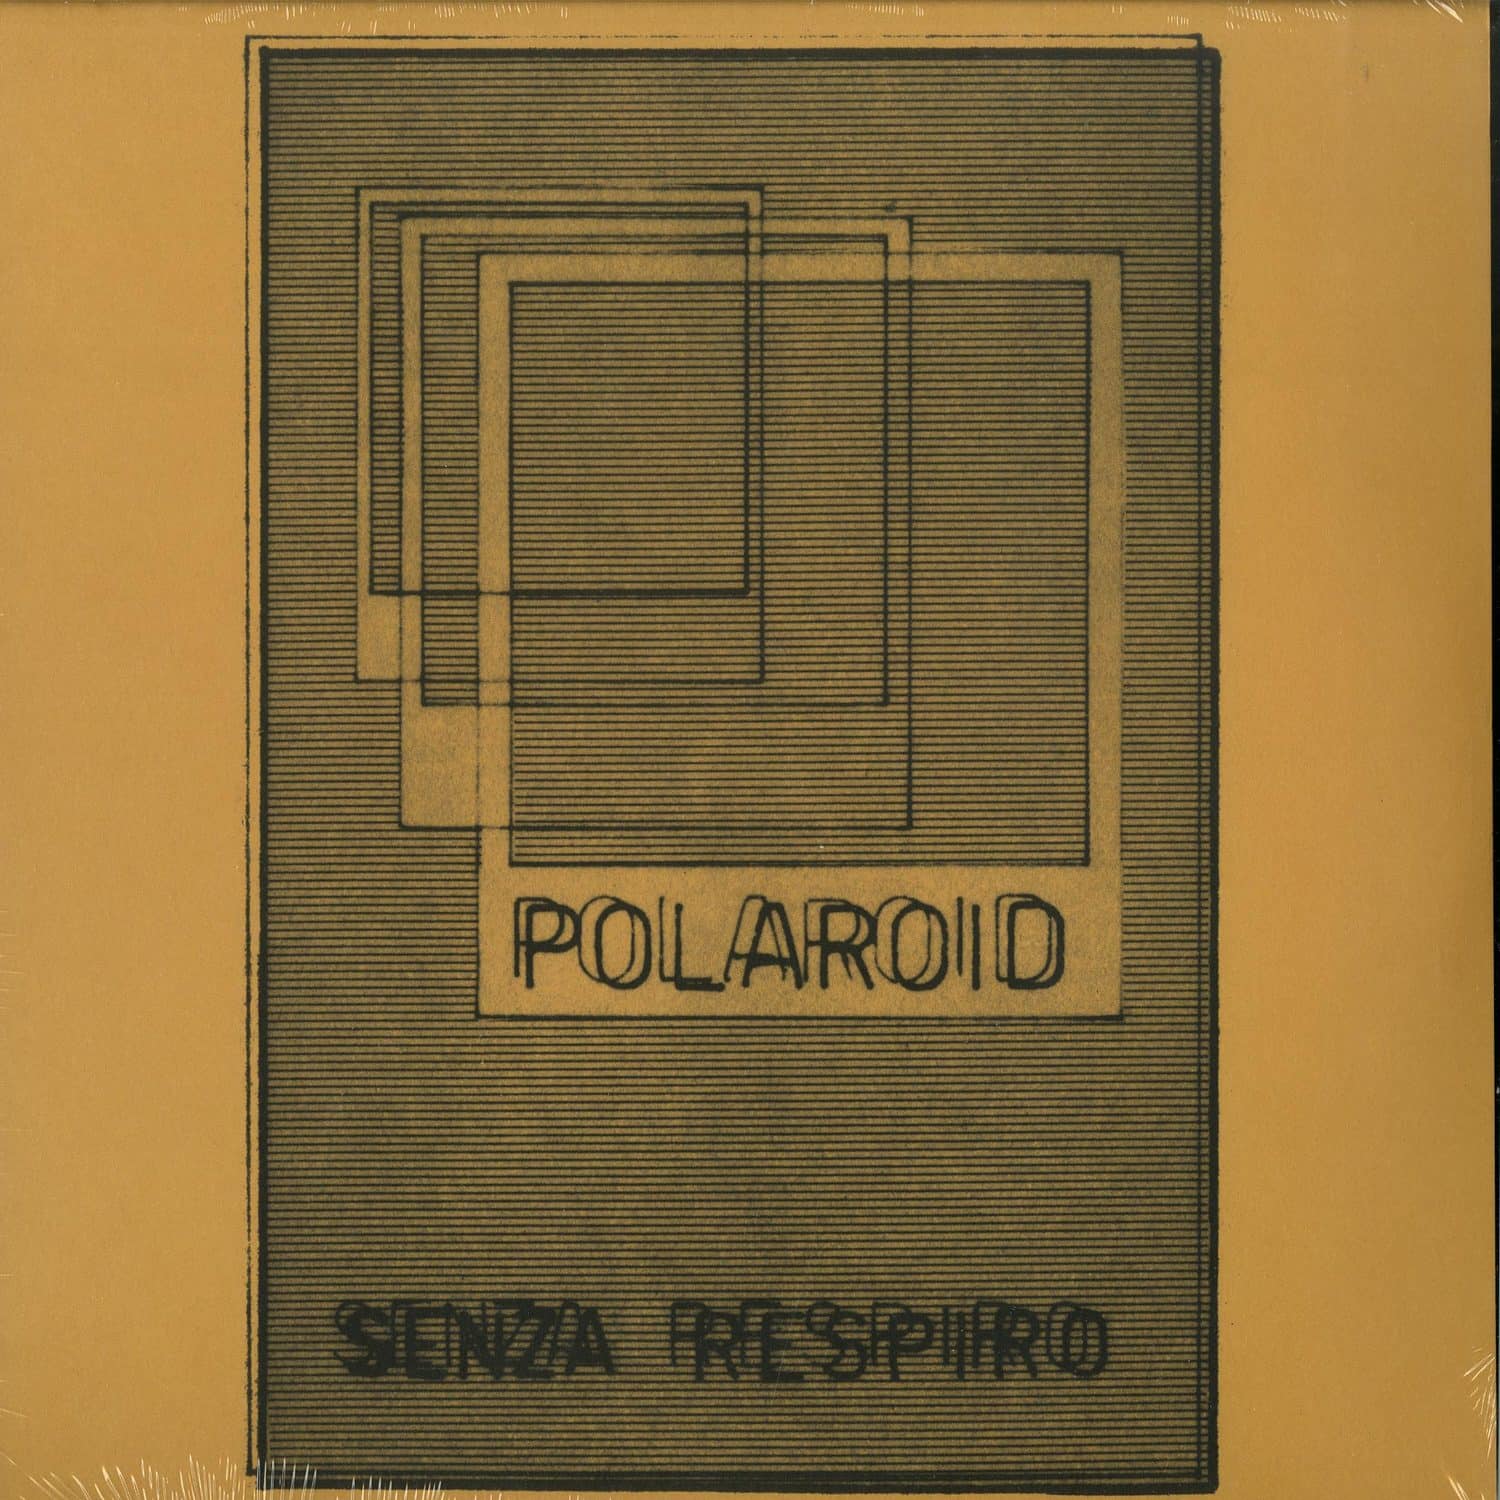 Polaroid - SENZA RESPIRO 